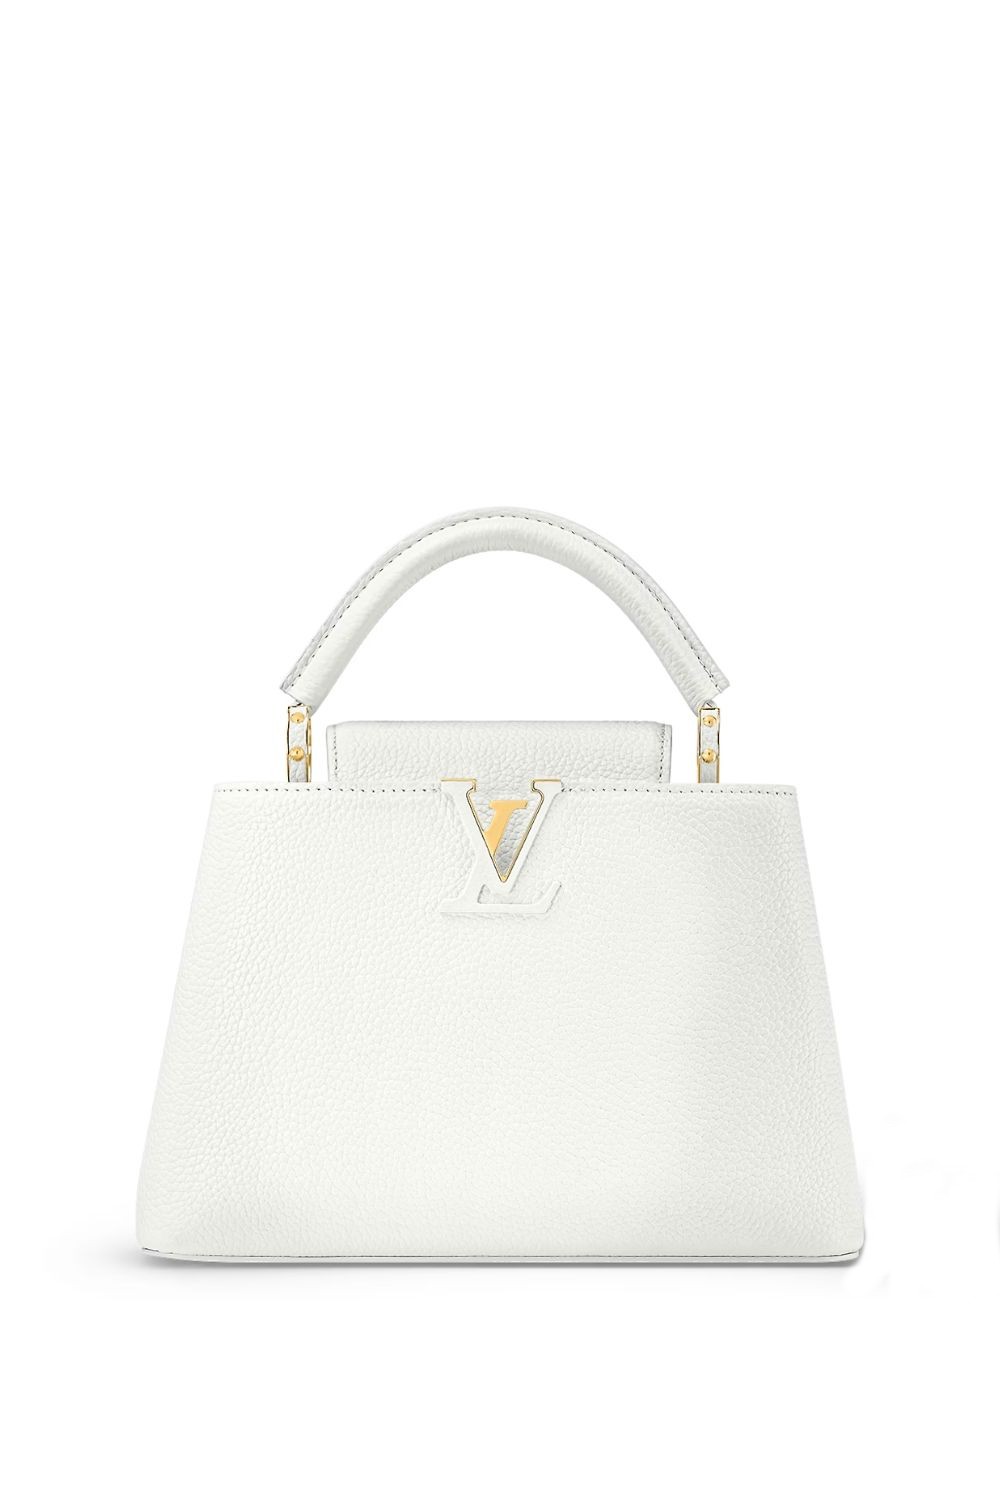 Louis-Vuitton-Capucine-Bag